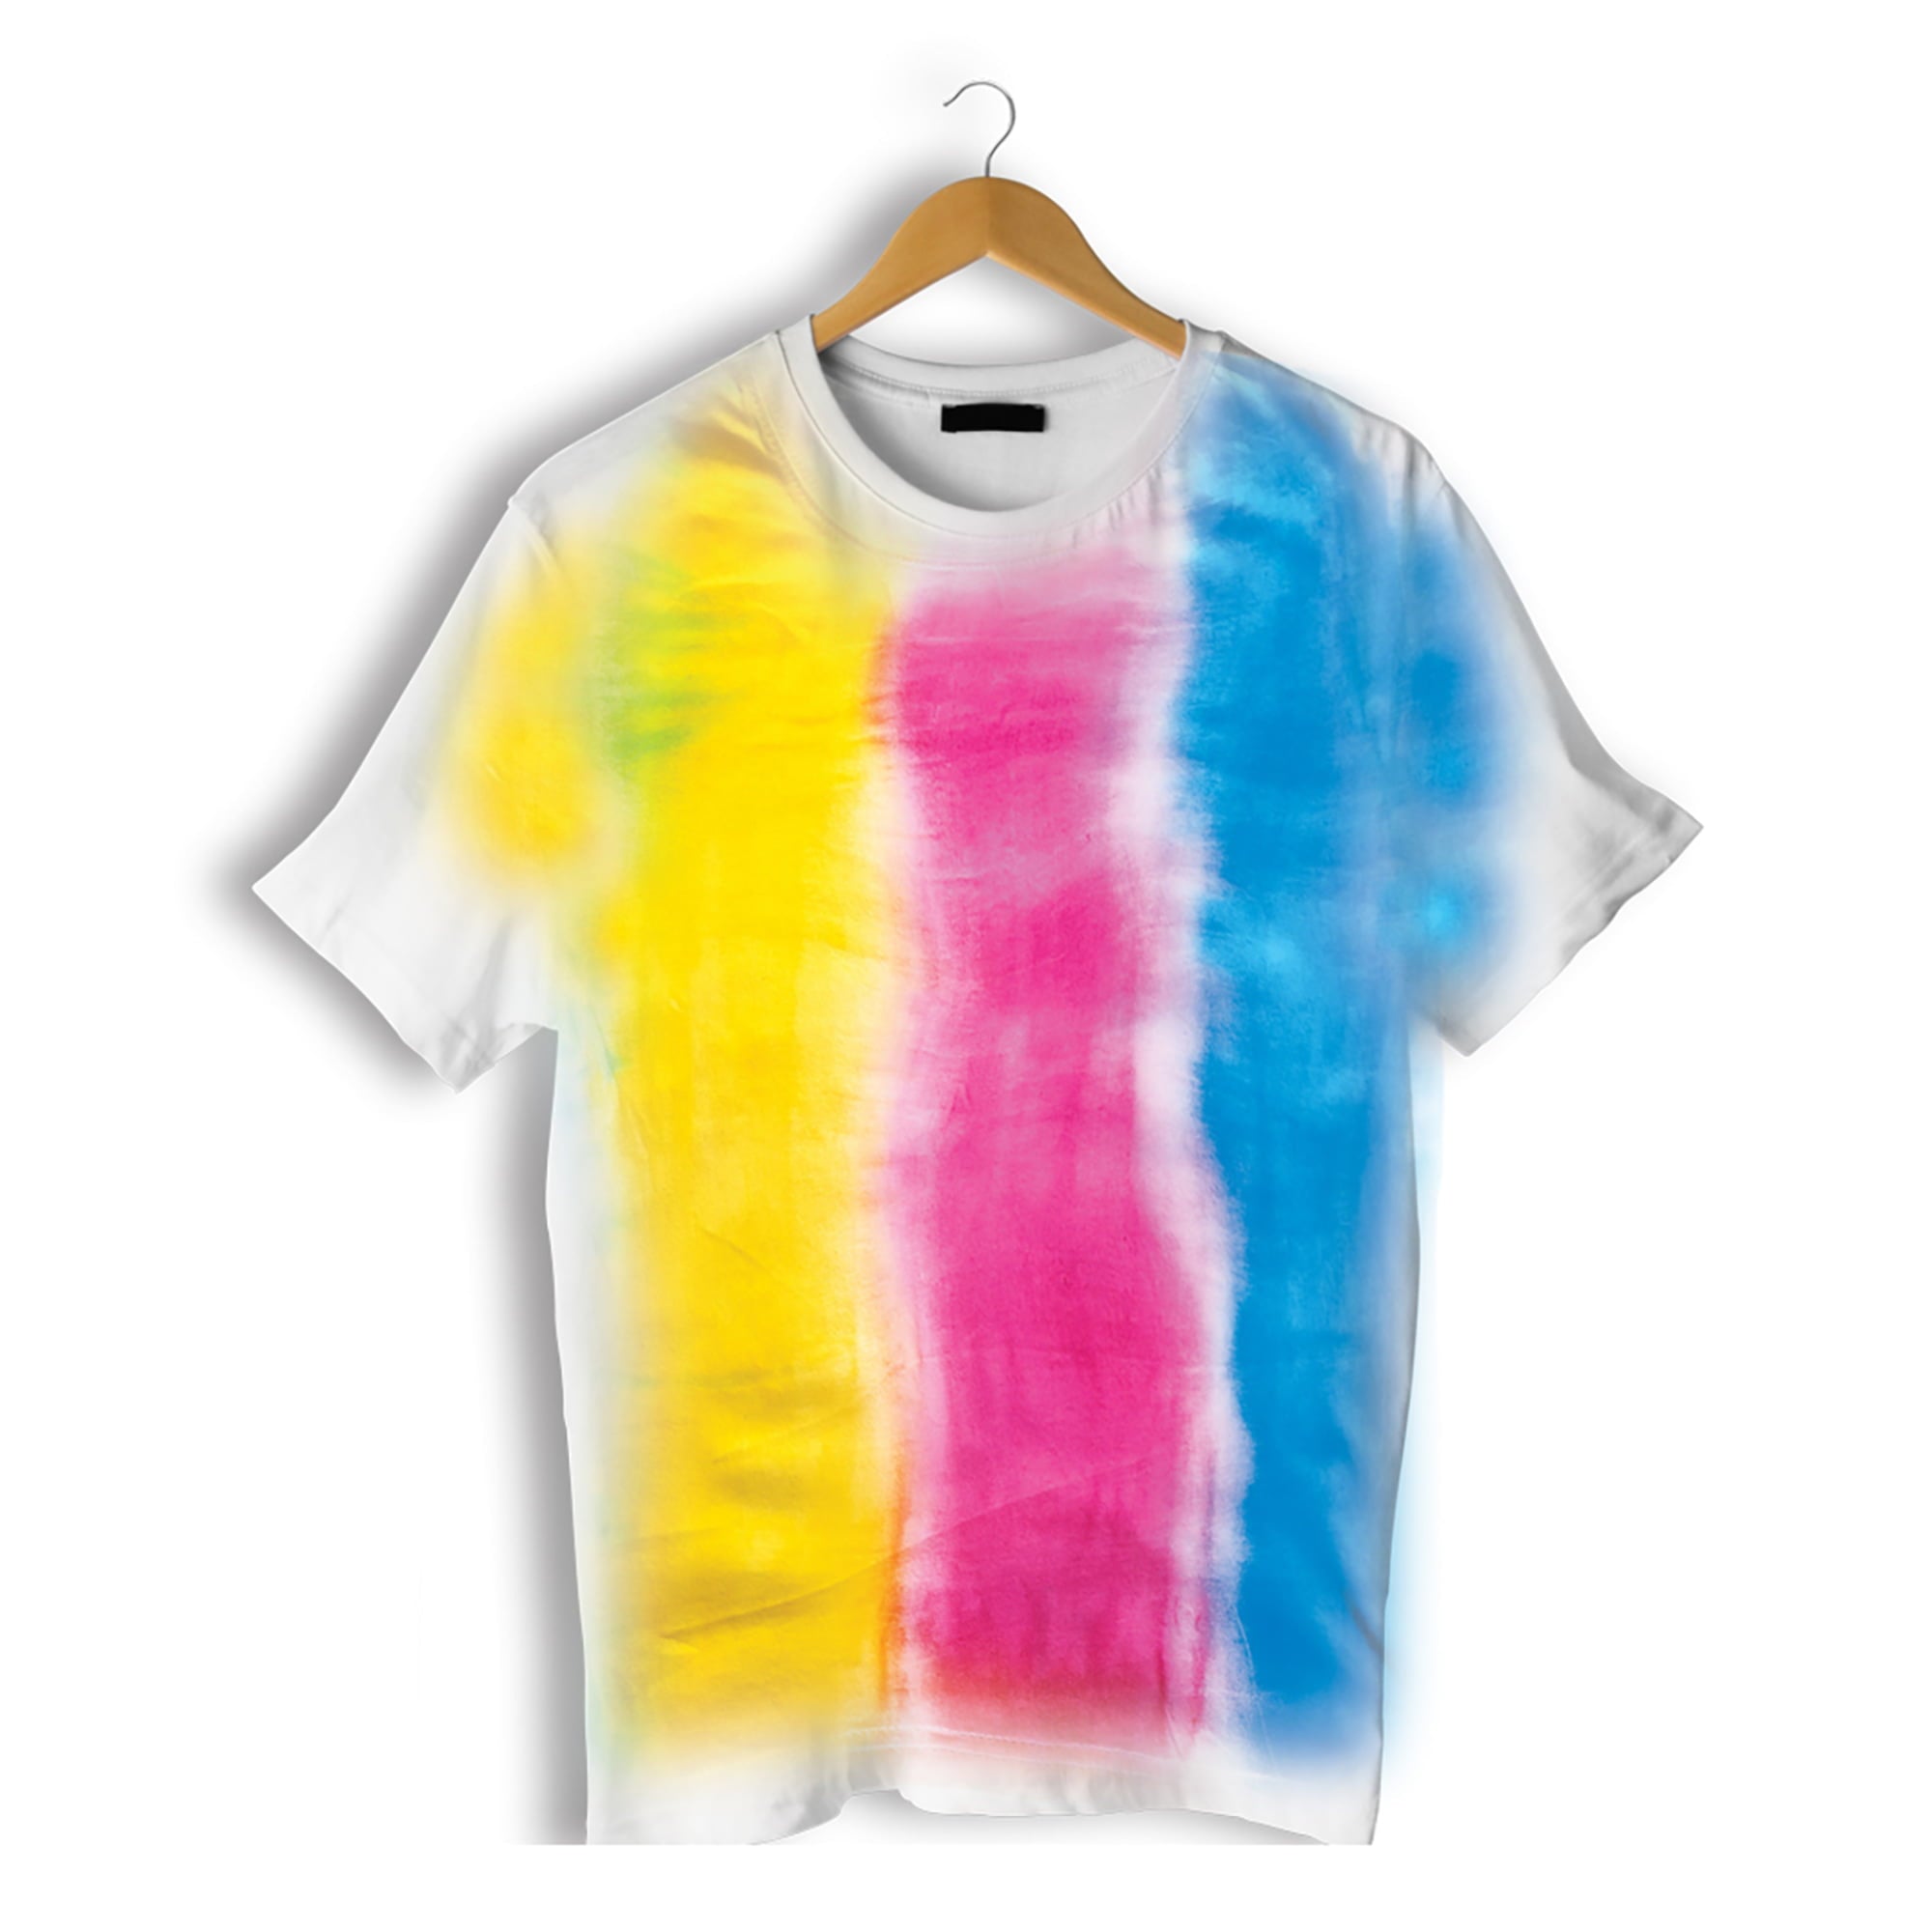 AMAV Fashion Time Tye Dye T-Shirt Kit, Everything You Need to Make a Tie Dye T-Shirt, Children Ages 8 andUp